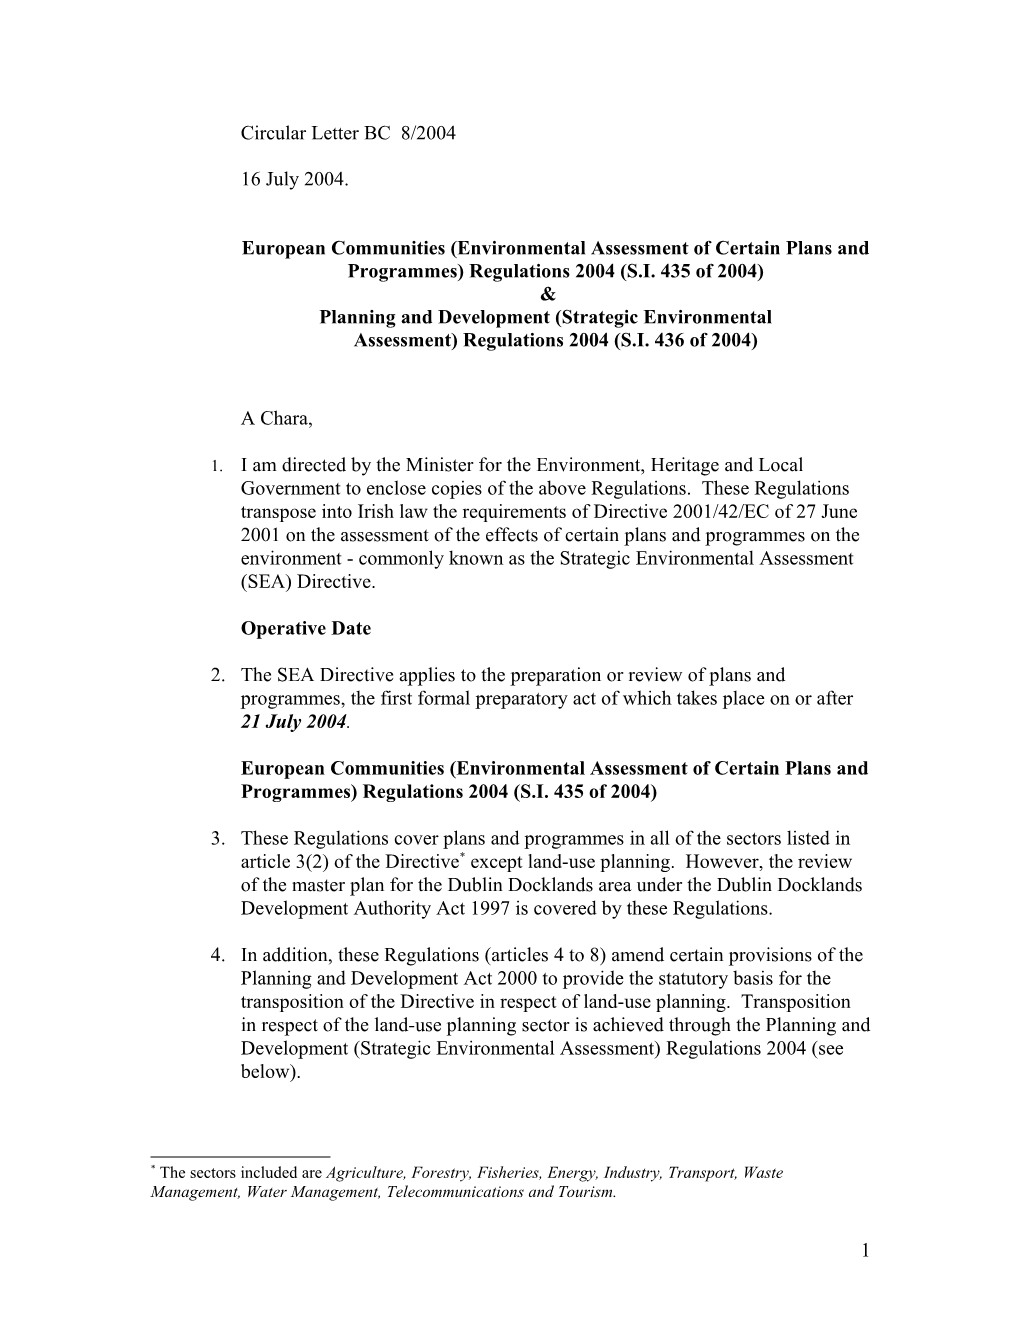 European Communities (Environmental Assessment of Certain Plans and Programmes) Regulations 2004